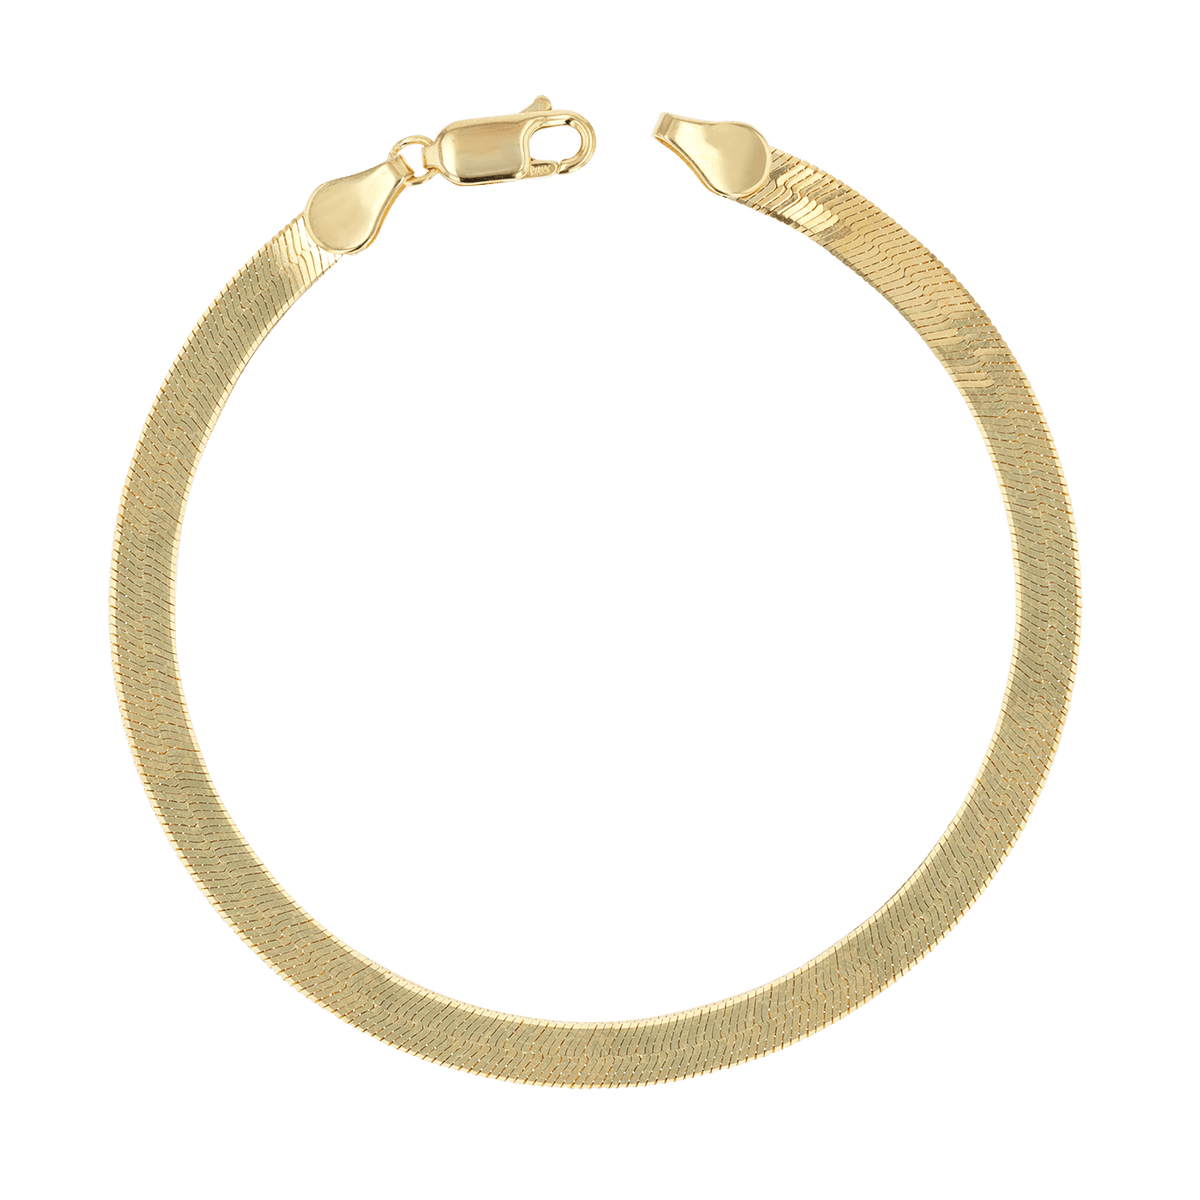 Vintage Solid 14k Yellow Gold 5mm Herringbone Chain Bracelet 